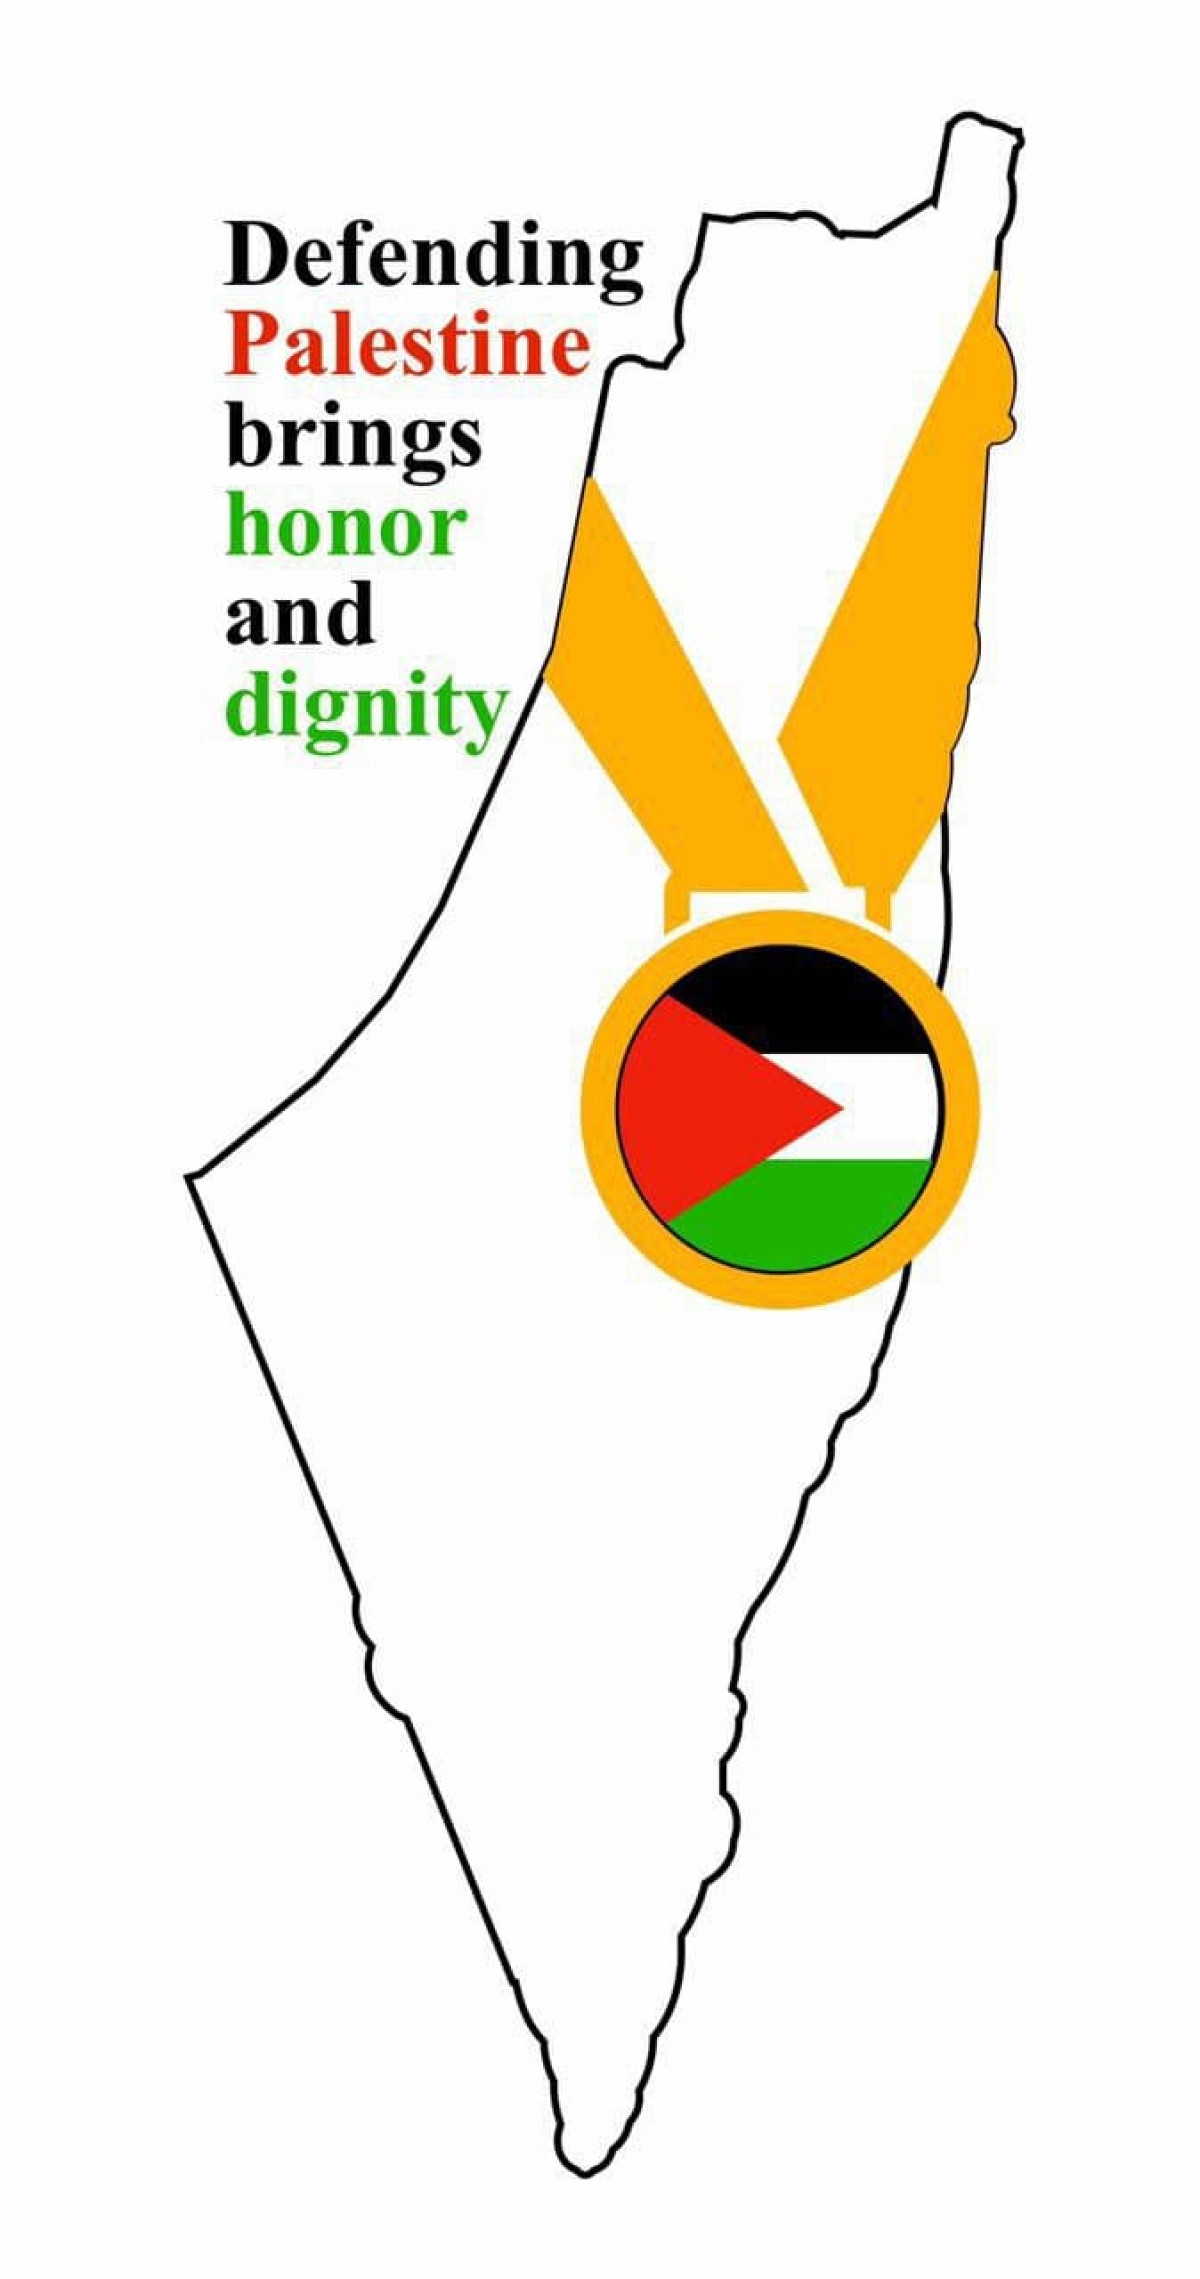 Defending Palestine brings honor and dignity